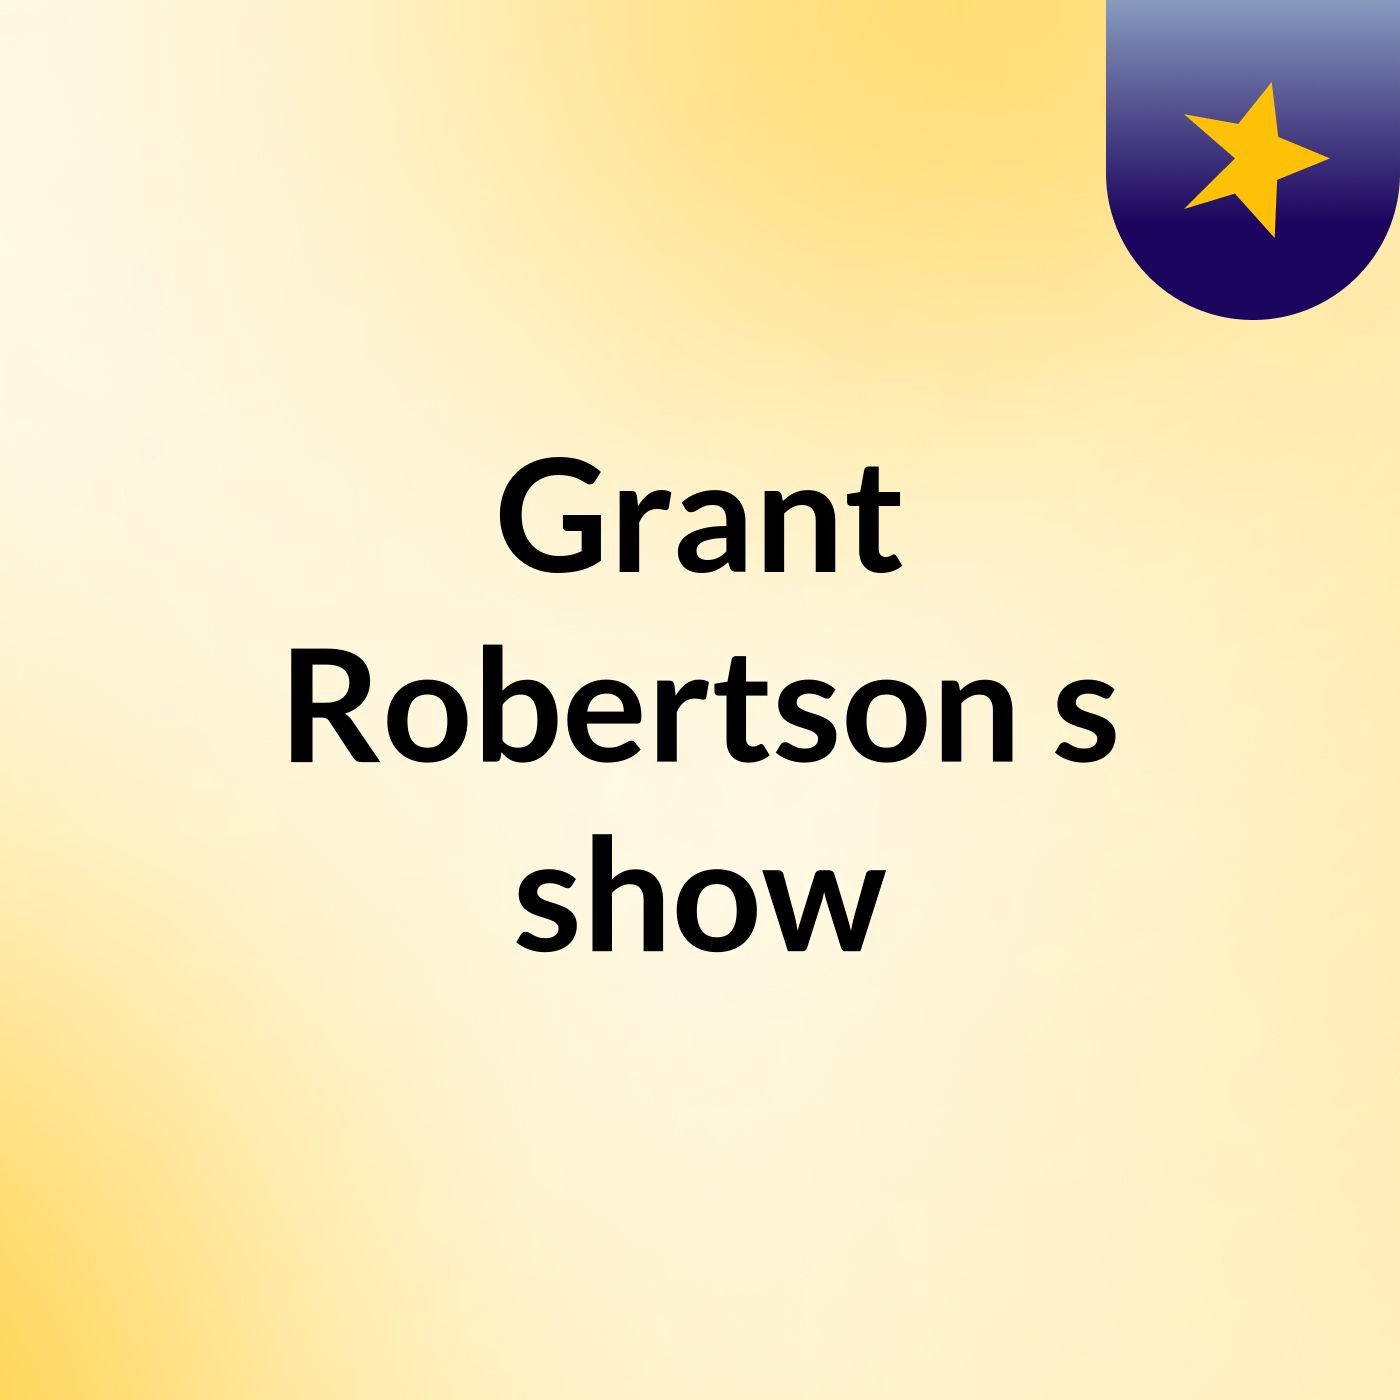 Episode 4 - Grant Robertson's show